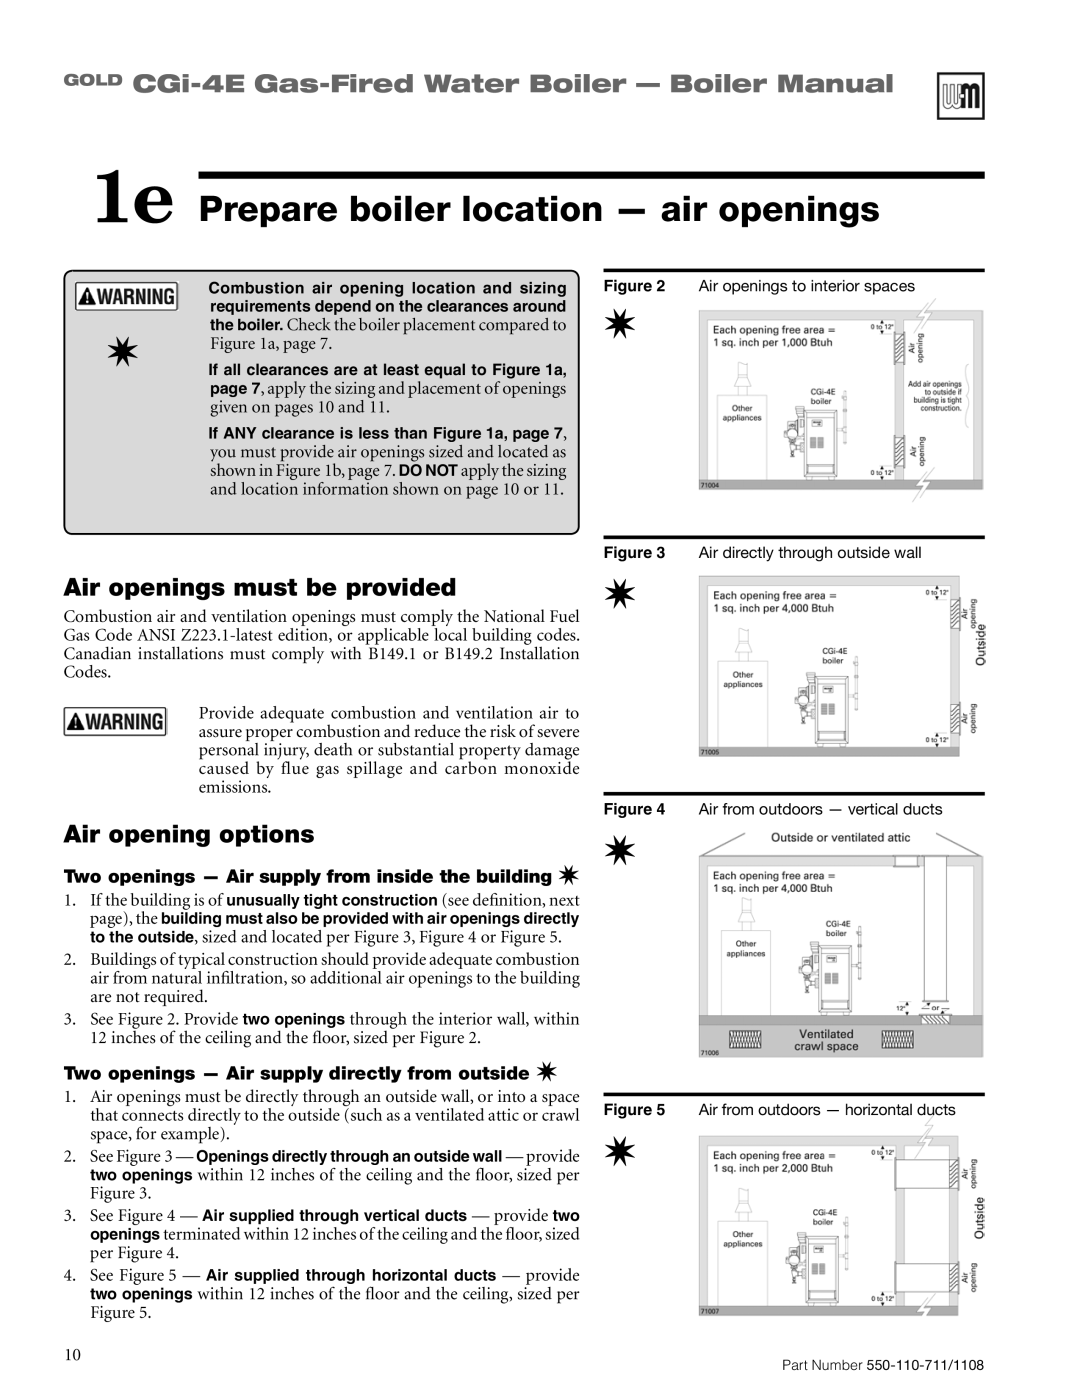 Weil-McLain CGI-4E manual 1e Prepare boiler location - air openings, GOLD CGi-4E Gas-FiredWater Boiler - Boiler Manual 